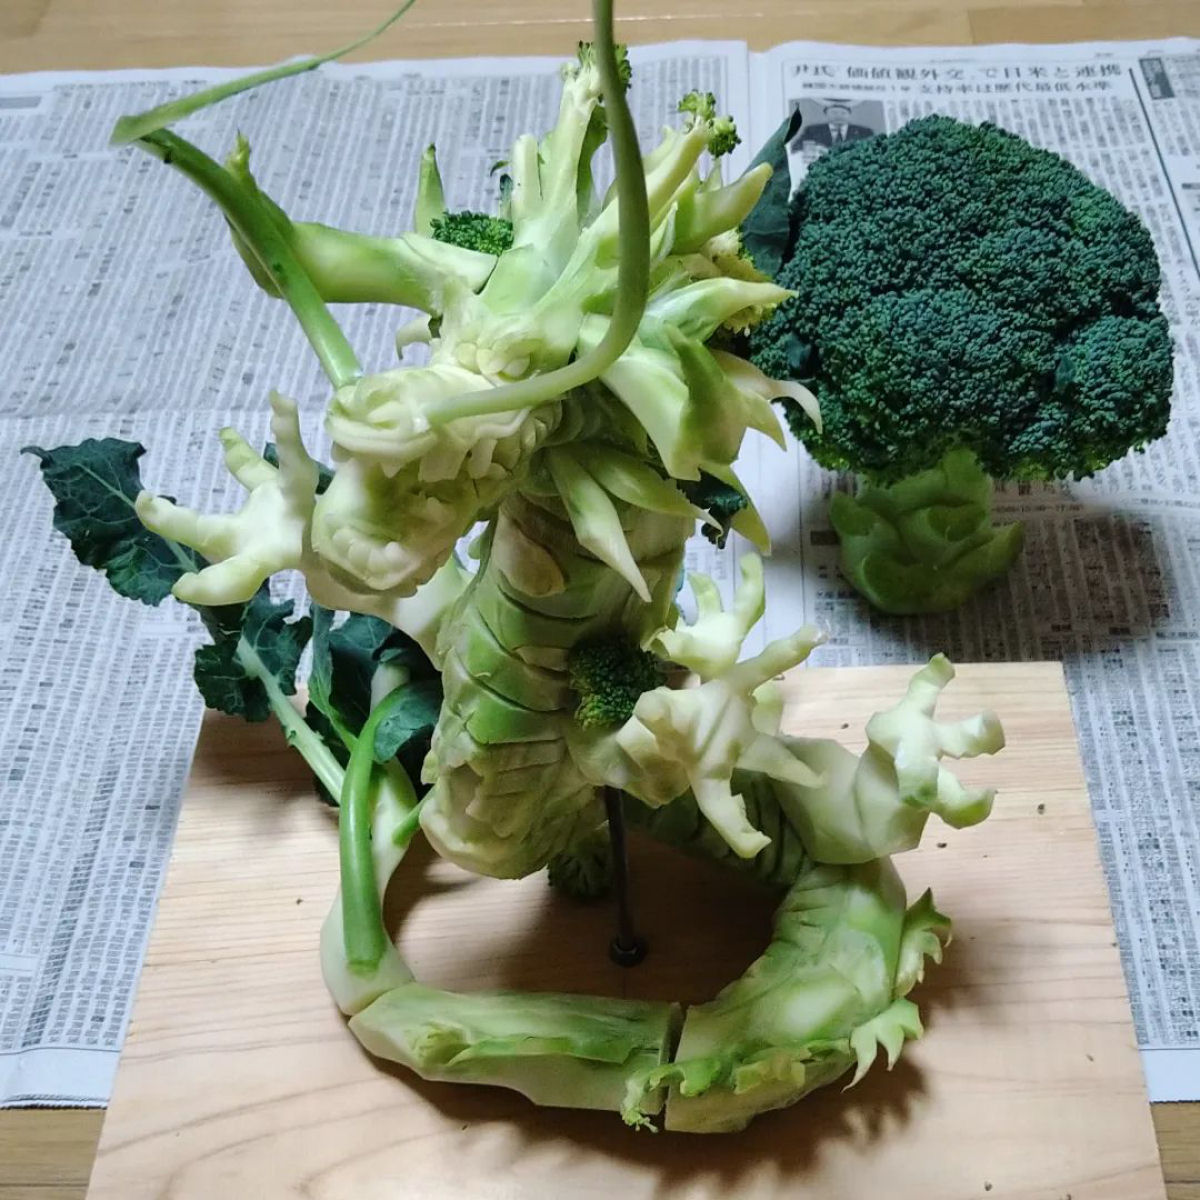 Escultor japons transforma frutas e legumes  em esculturas comestveis brilhantes 08